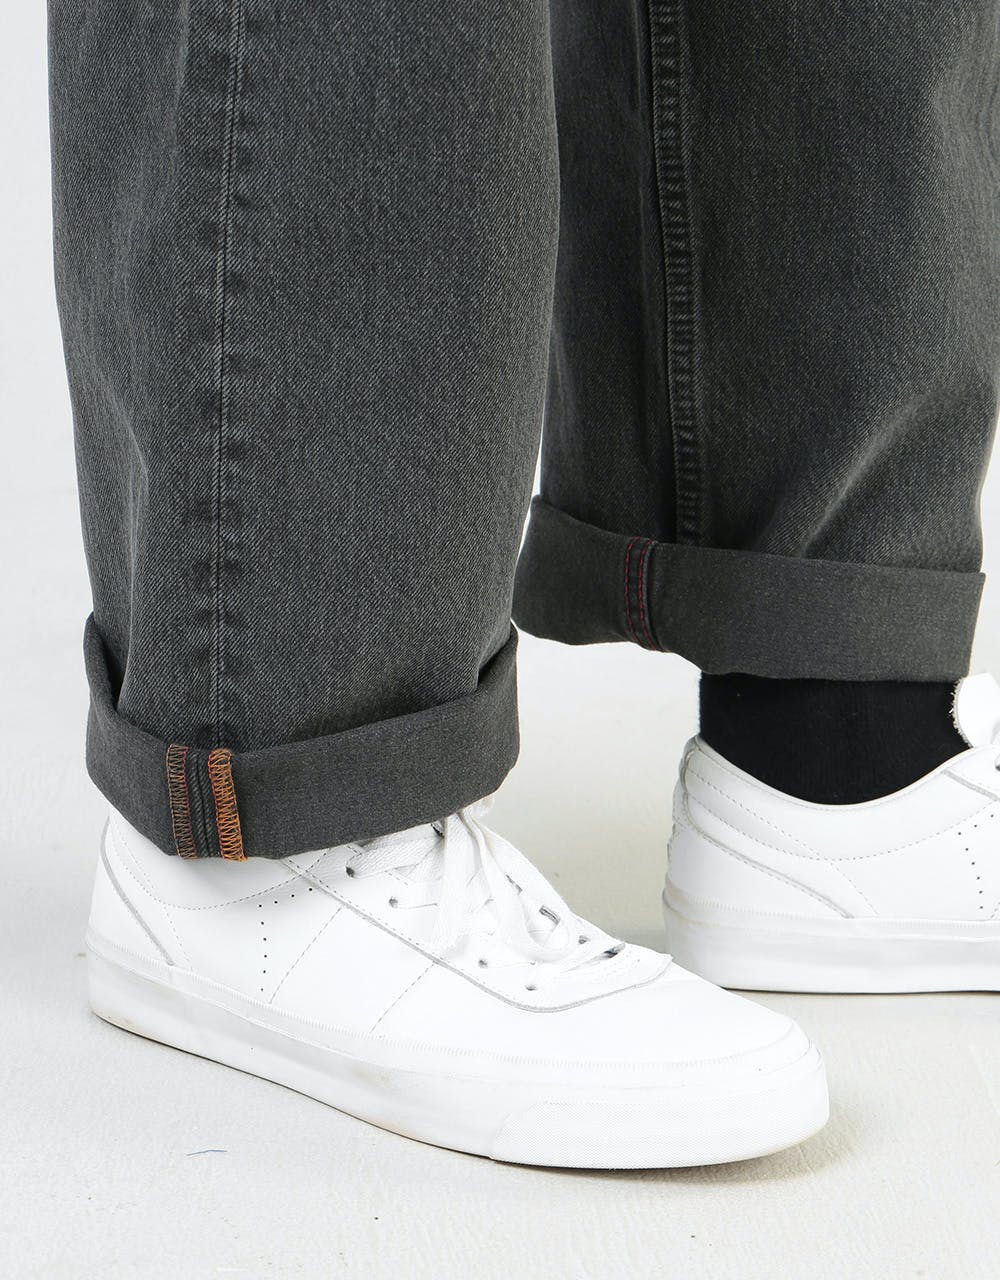 Levi's Skateboarding Skate Baggy 5 Pocket Denim Jeans - Colton